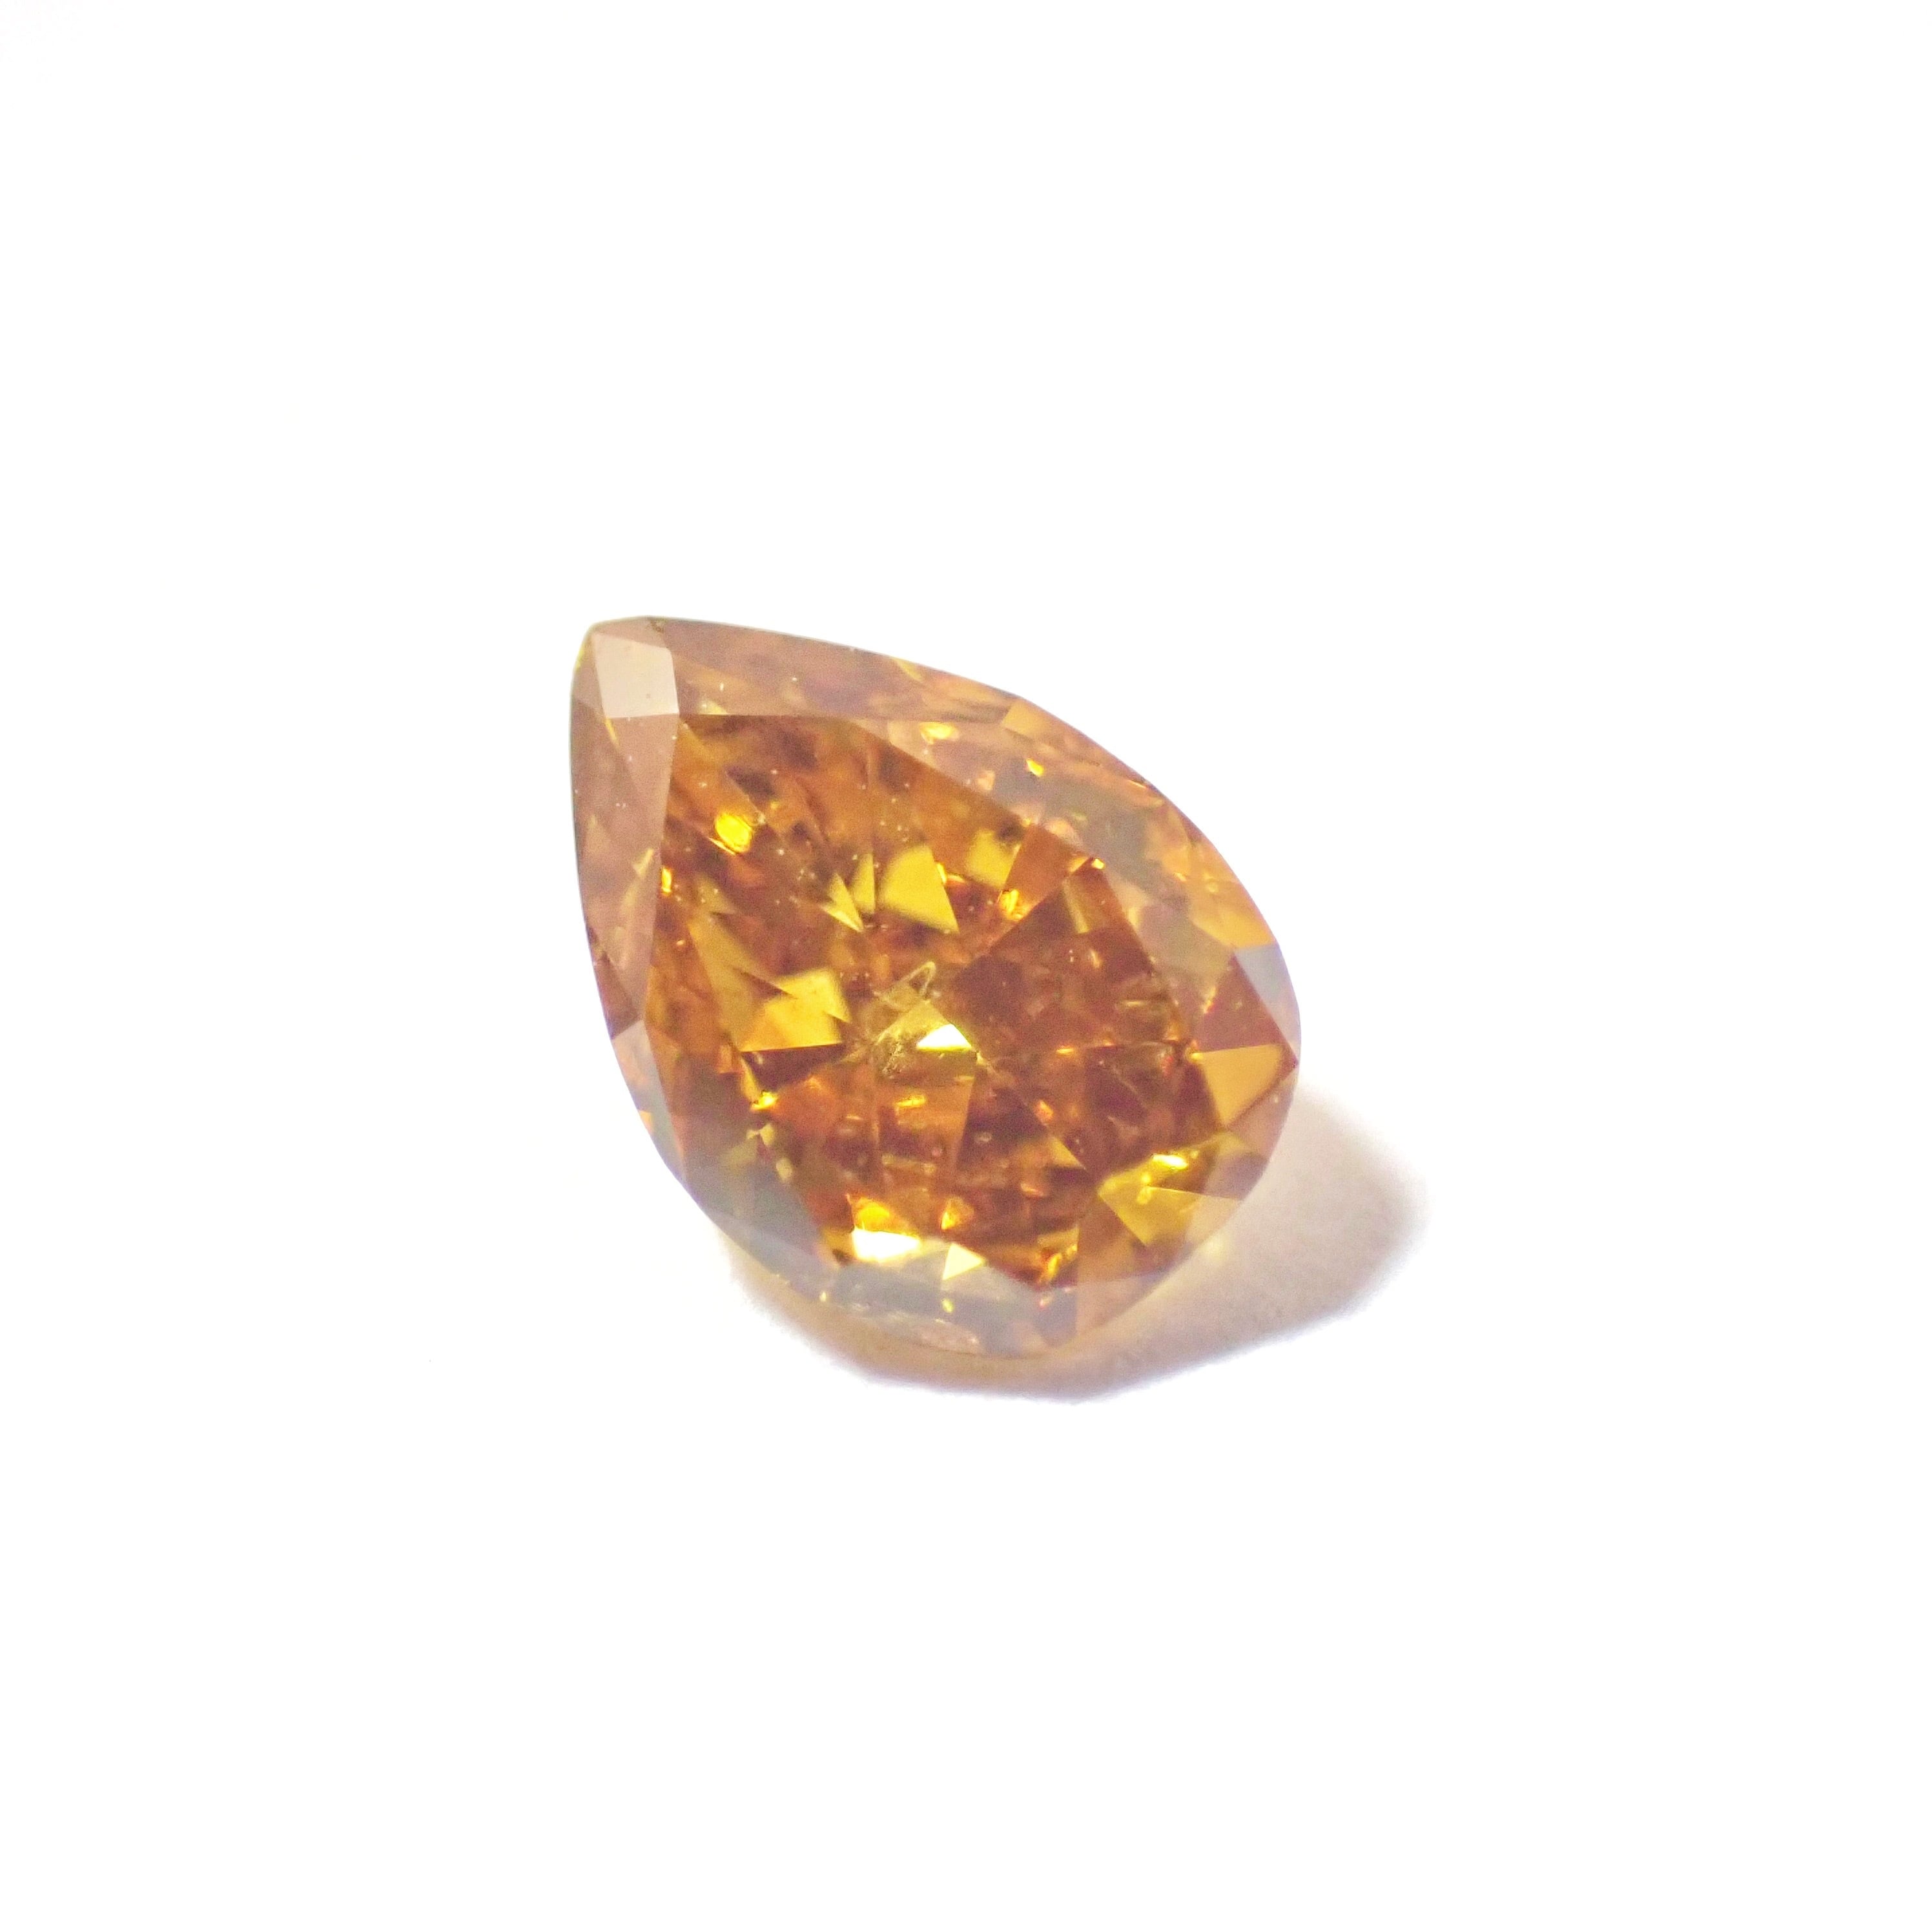 Fancy Intense Brown Orange 0.375ct ファンシー オレンジ ダイヤモンド ルース 裸石 天然 ソーティング付き  オレンジダイヤモンド 5mm ペアシェイプ ダイヤモンド ペアシェイプ